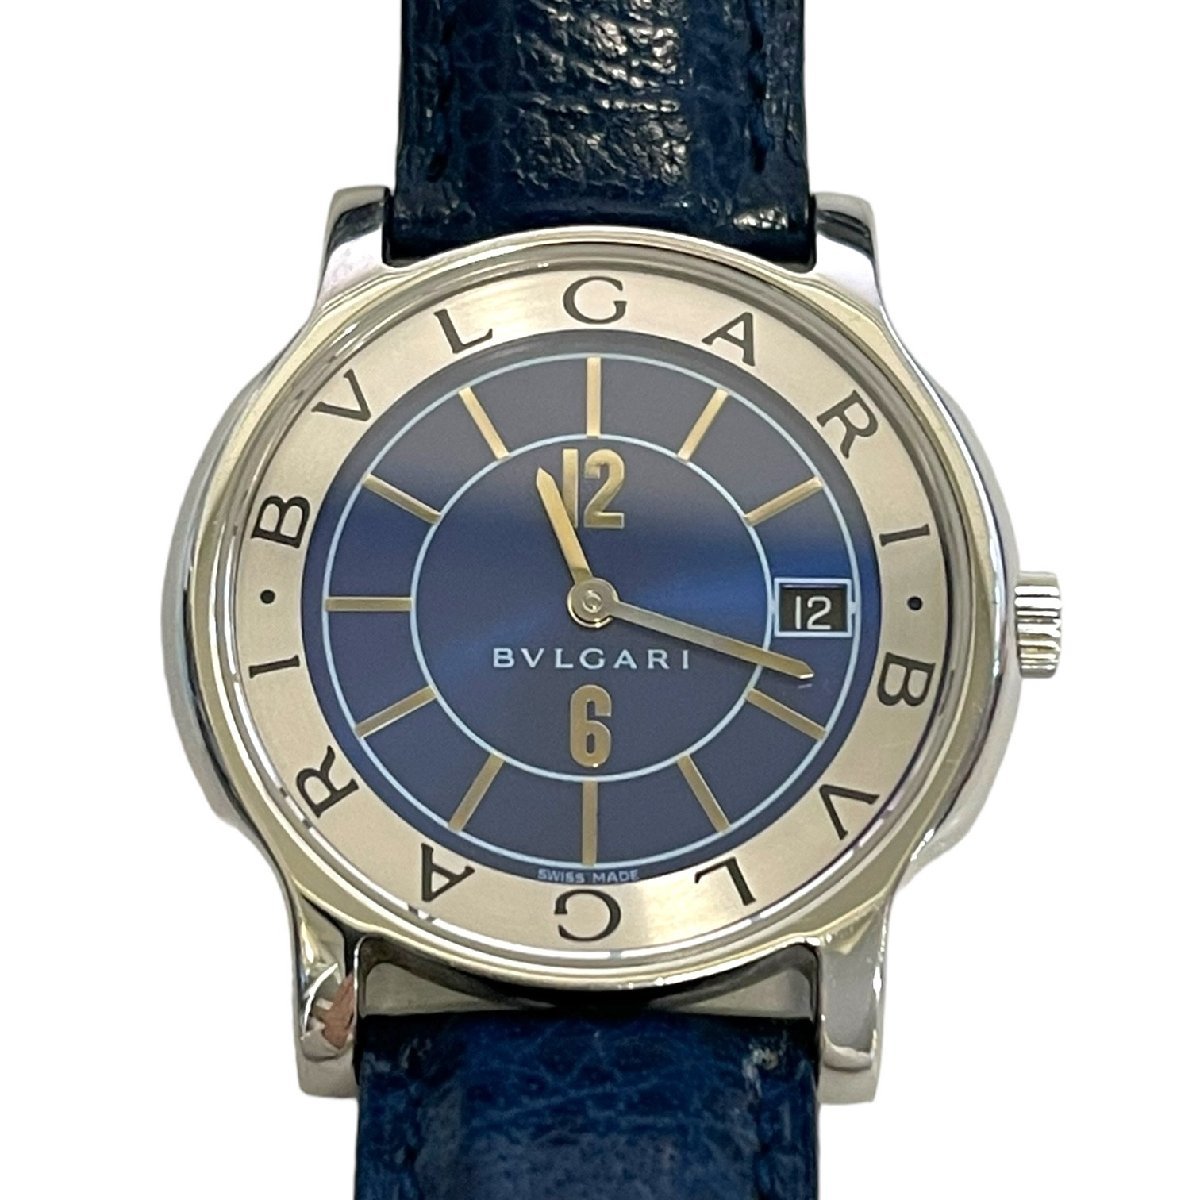 [ б/у товар ] BVLGARI BVLGARY Solotempo ST35S Date синий циферблат кварц ремень оригинальный мужские наручные часы без коробки корпус только L48153RD